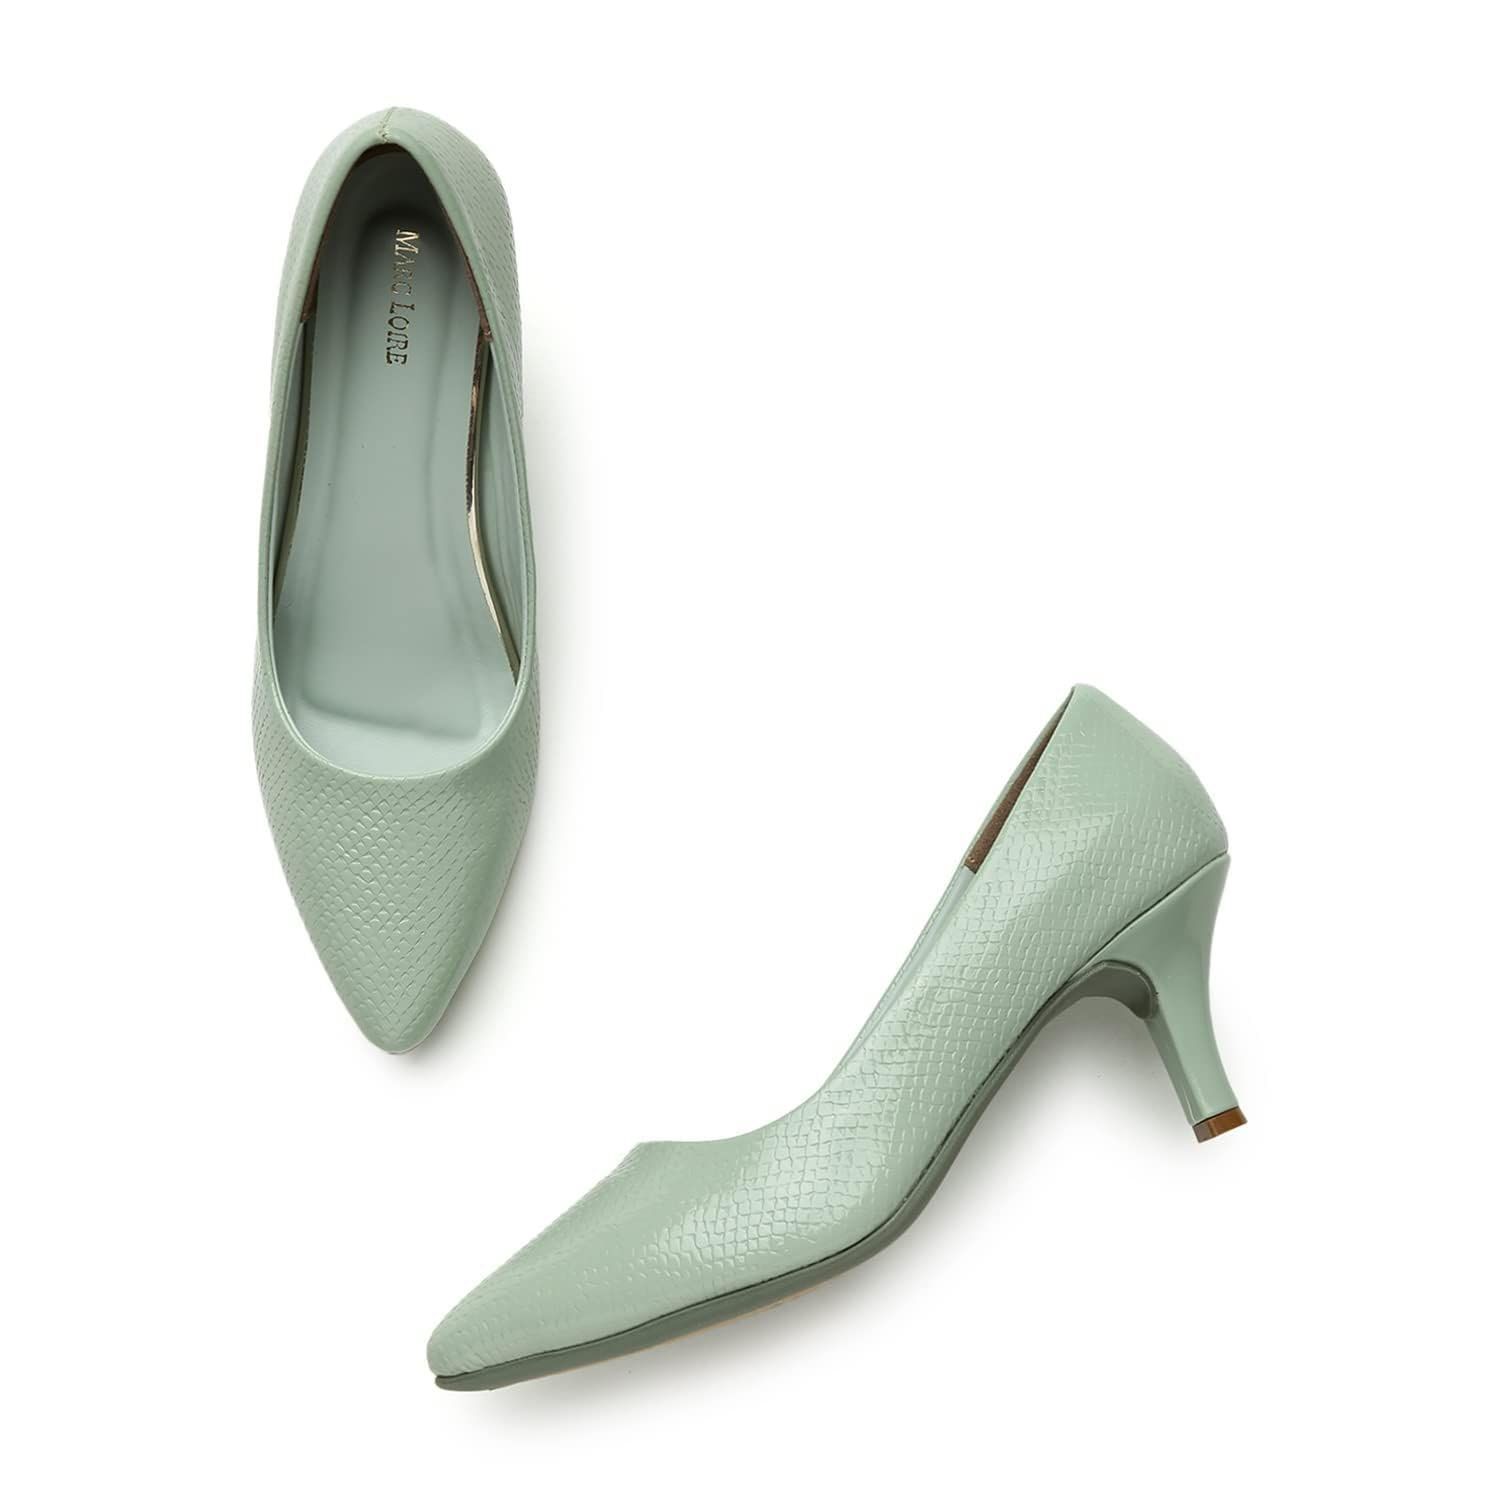 Buy Rocia White Women Patent Kitten Heel Pumps Online at Regal Shoes  |8091608